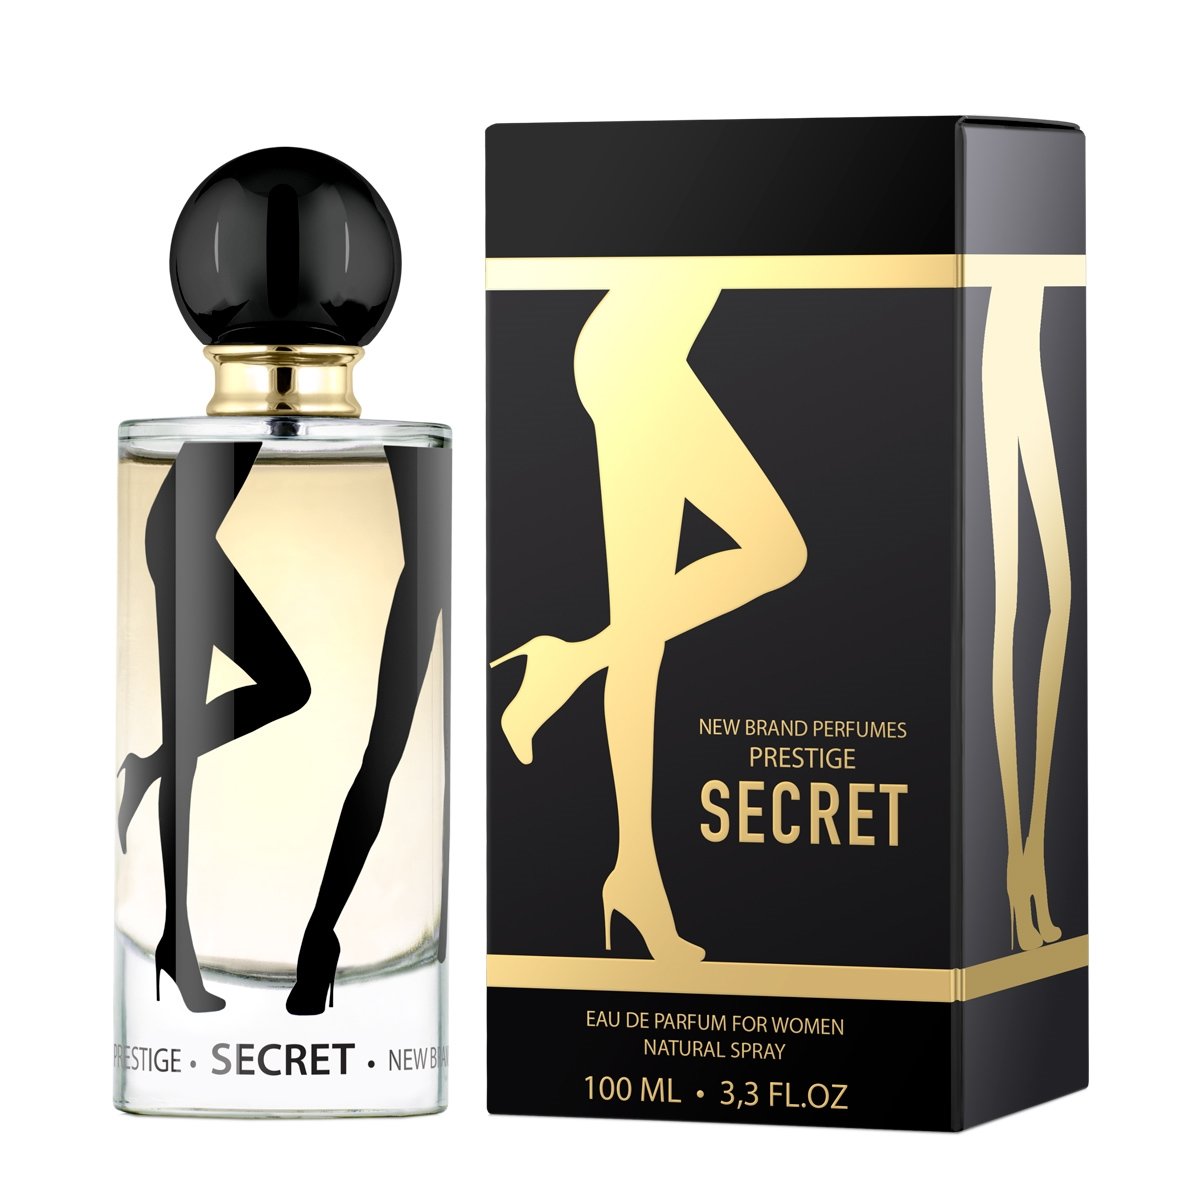 Perfume New Brand Prestige Secret For Women - Eau de Parfum Feminino 100ml 2